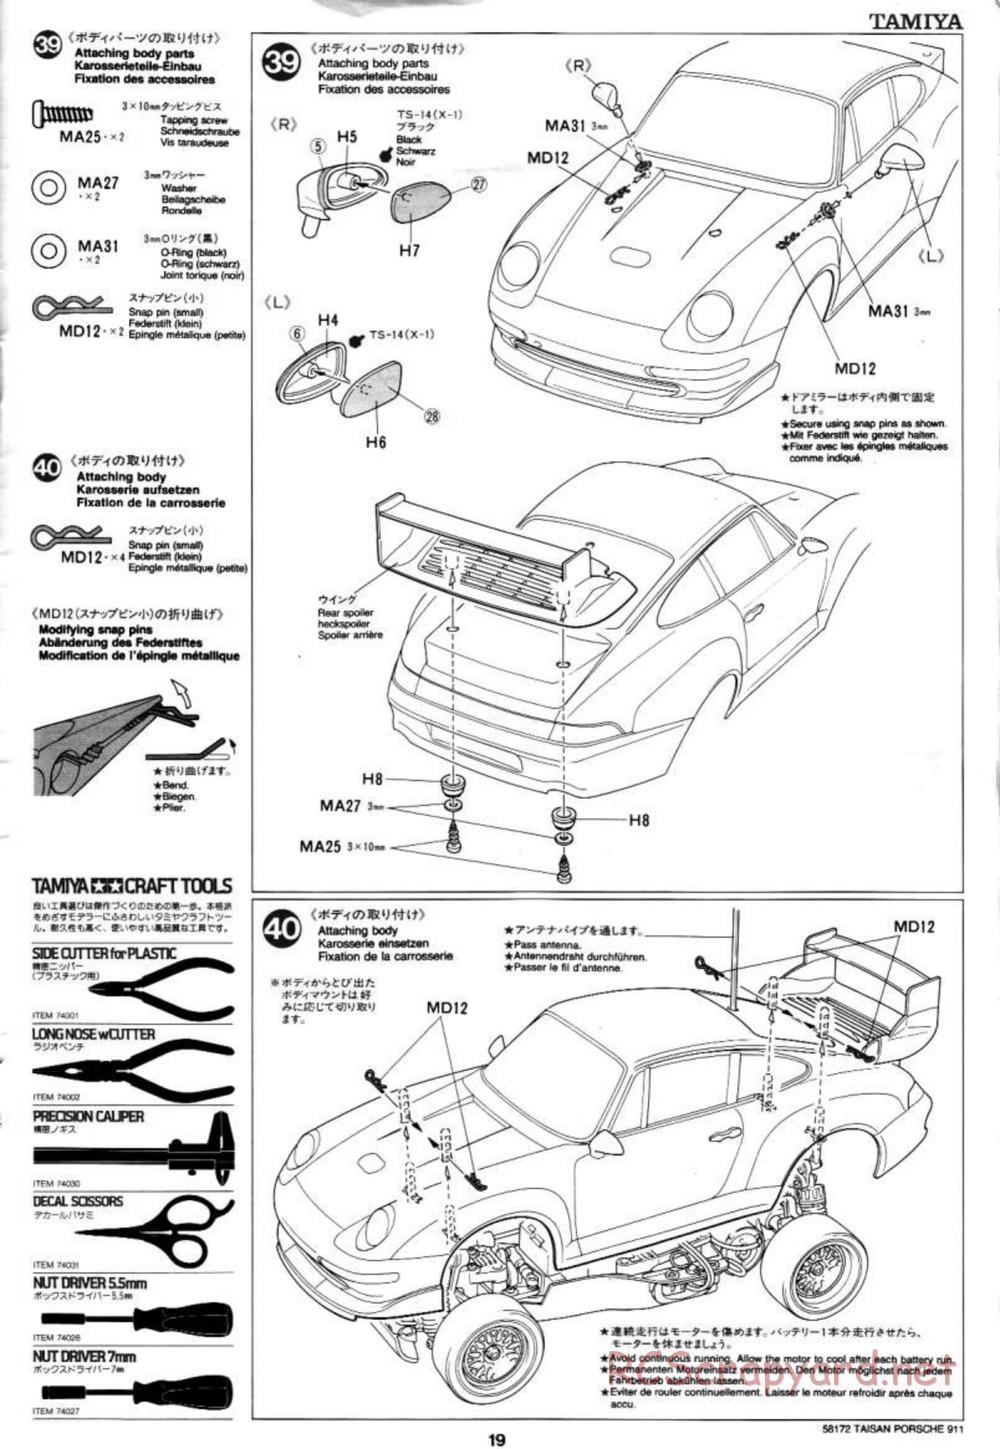 Tamiya - Taisan Starcard Porsche 911 GT2 - TA-02SW Chassis - Manual - Page 19